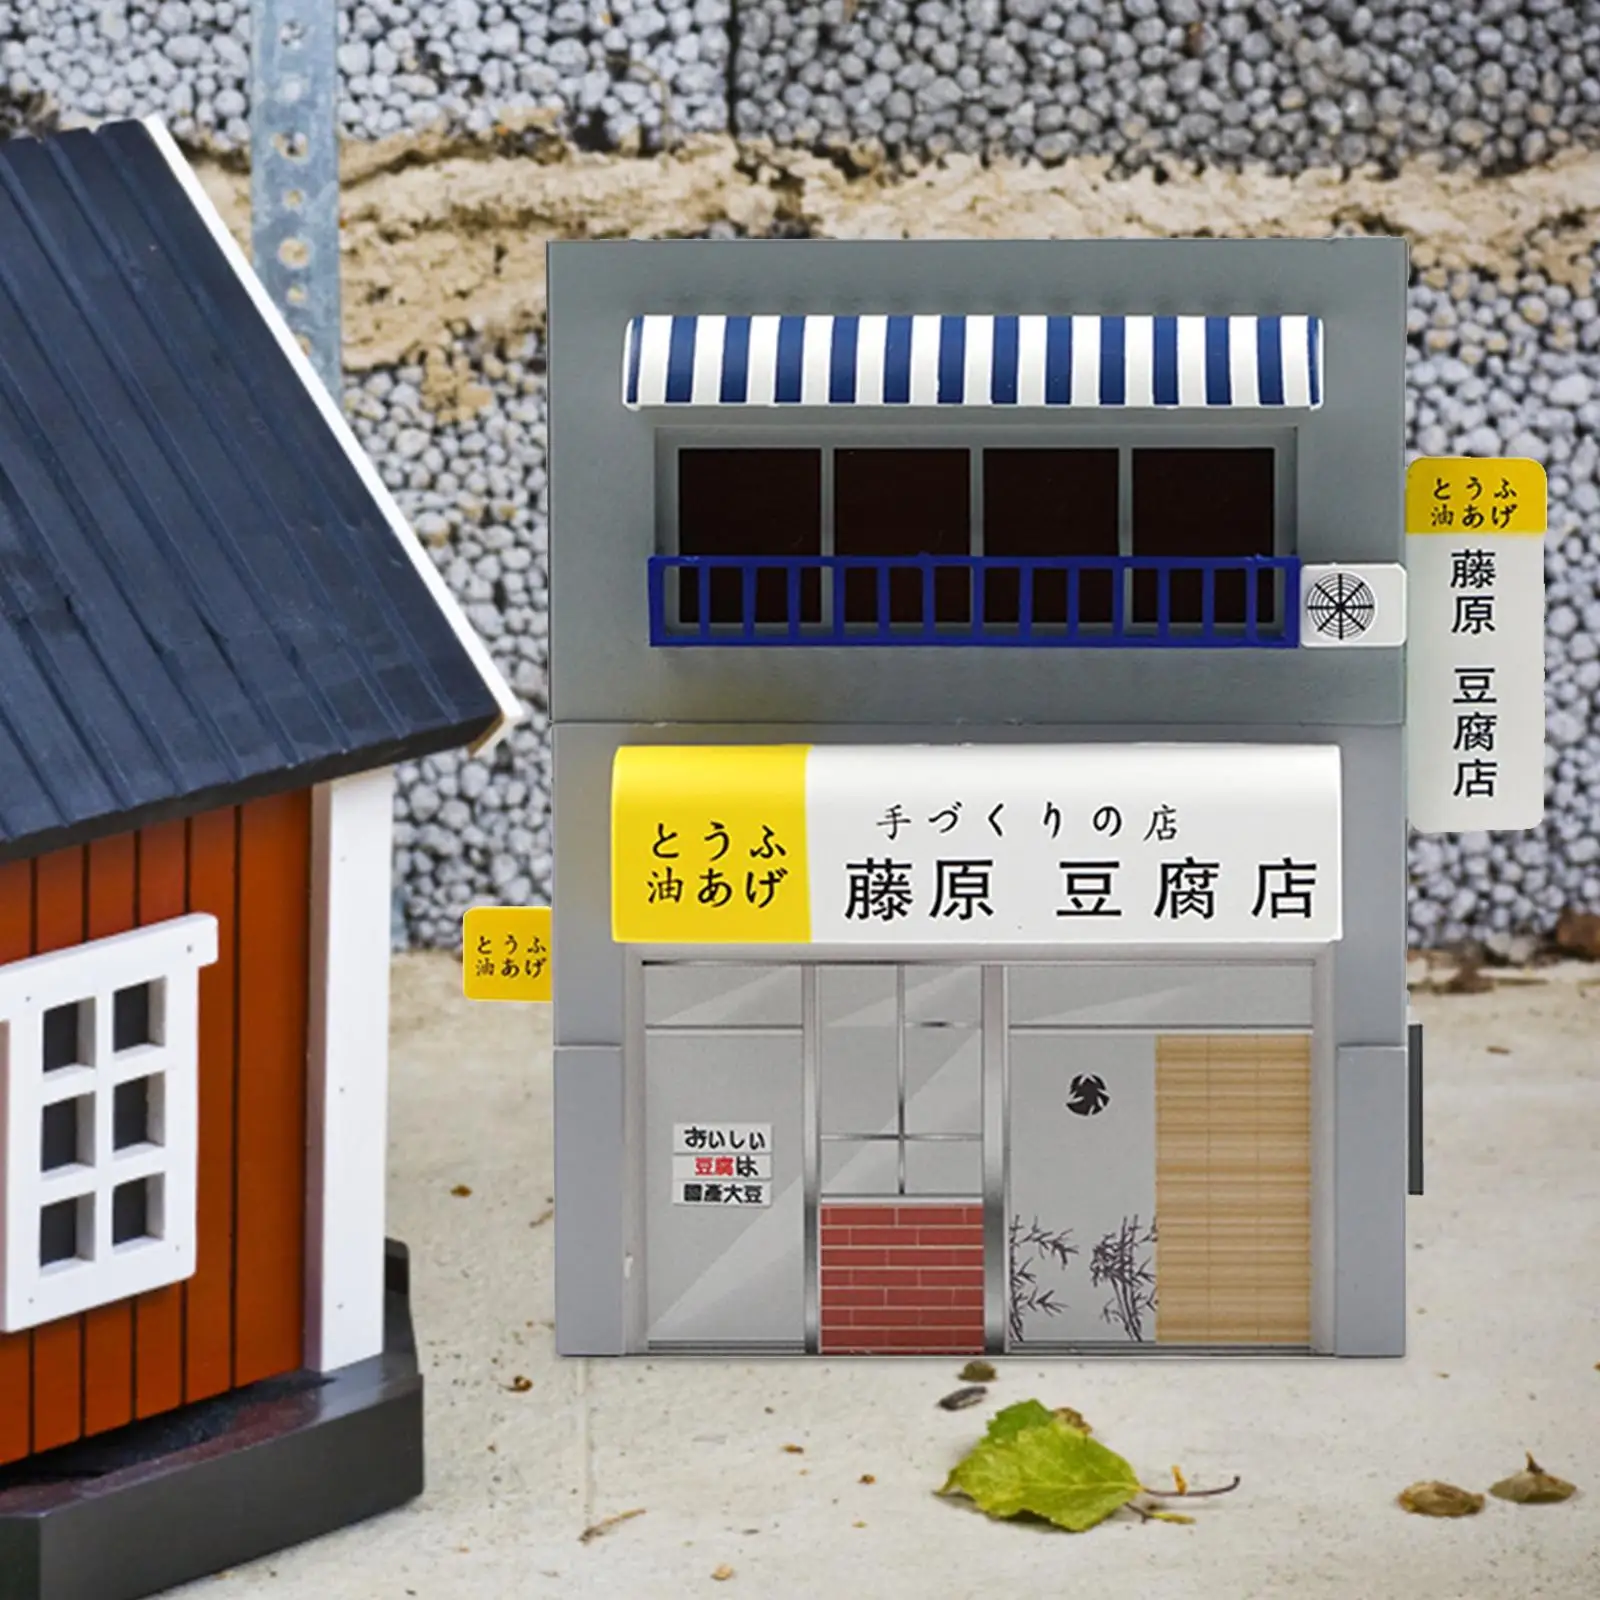 1:64 Scale Tofu Shop Diorama Model Collection Desktop S Scale Architectural Movie Props Scenery Store Townscape Scenery Ornament